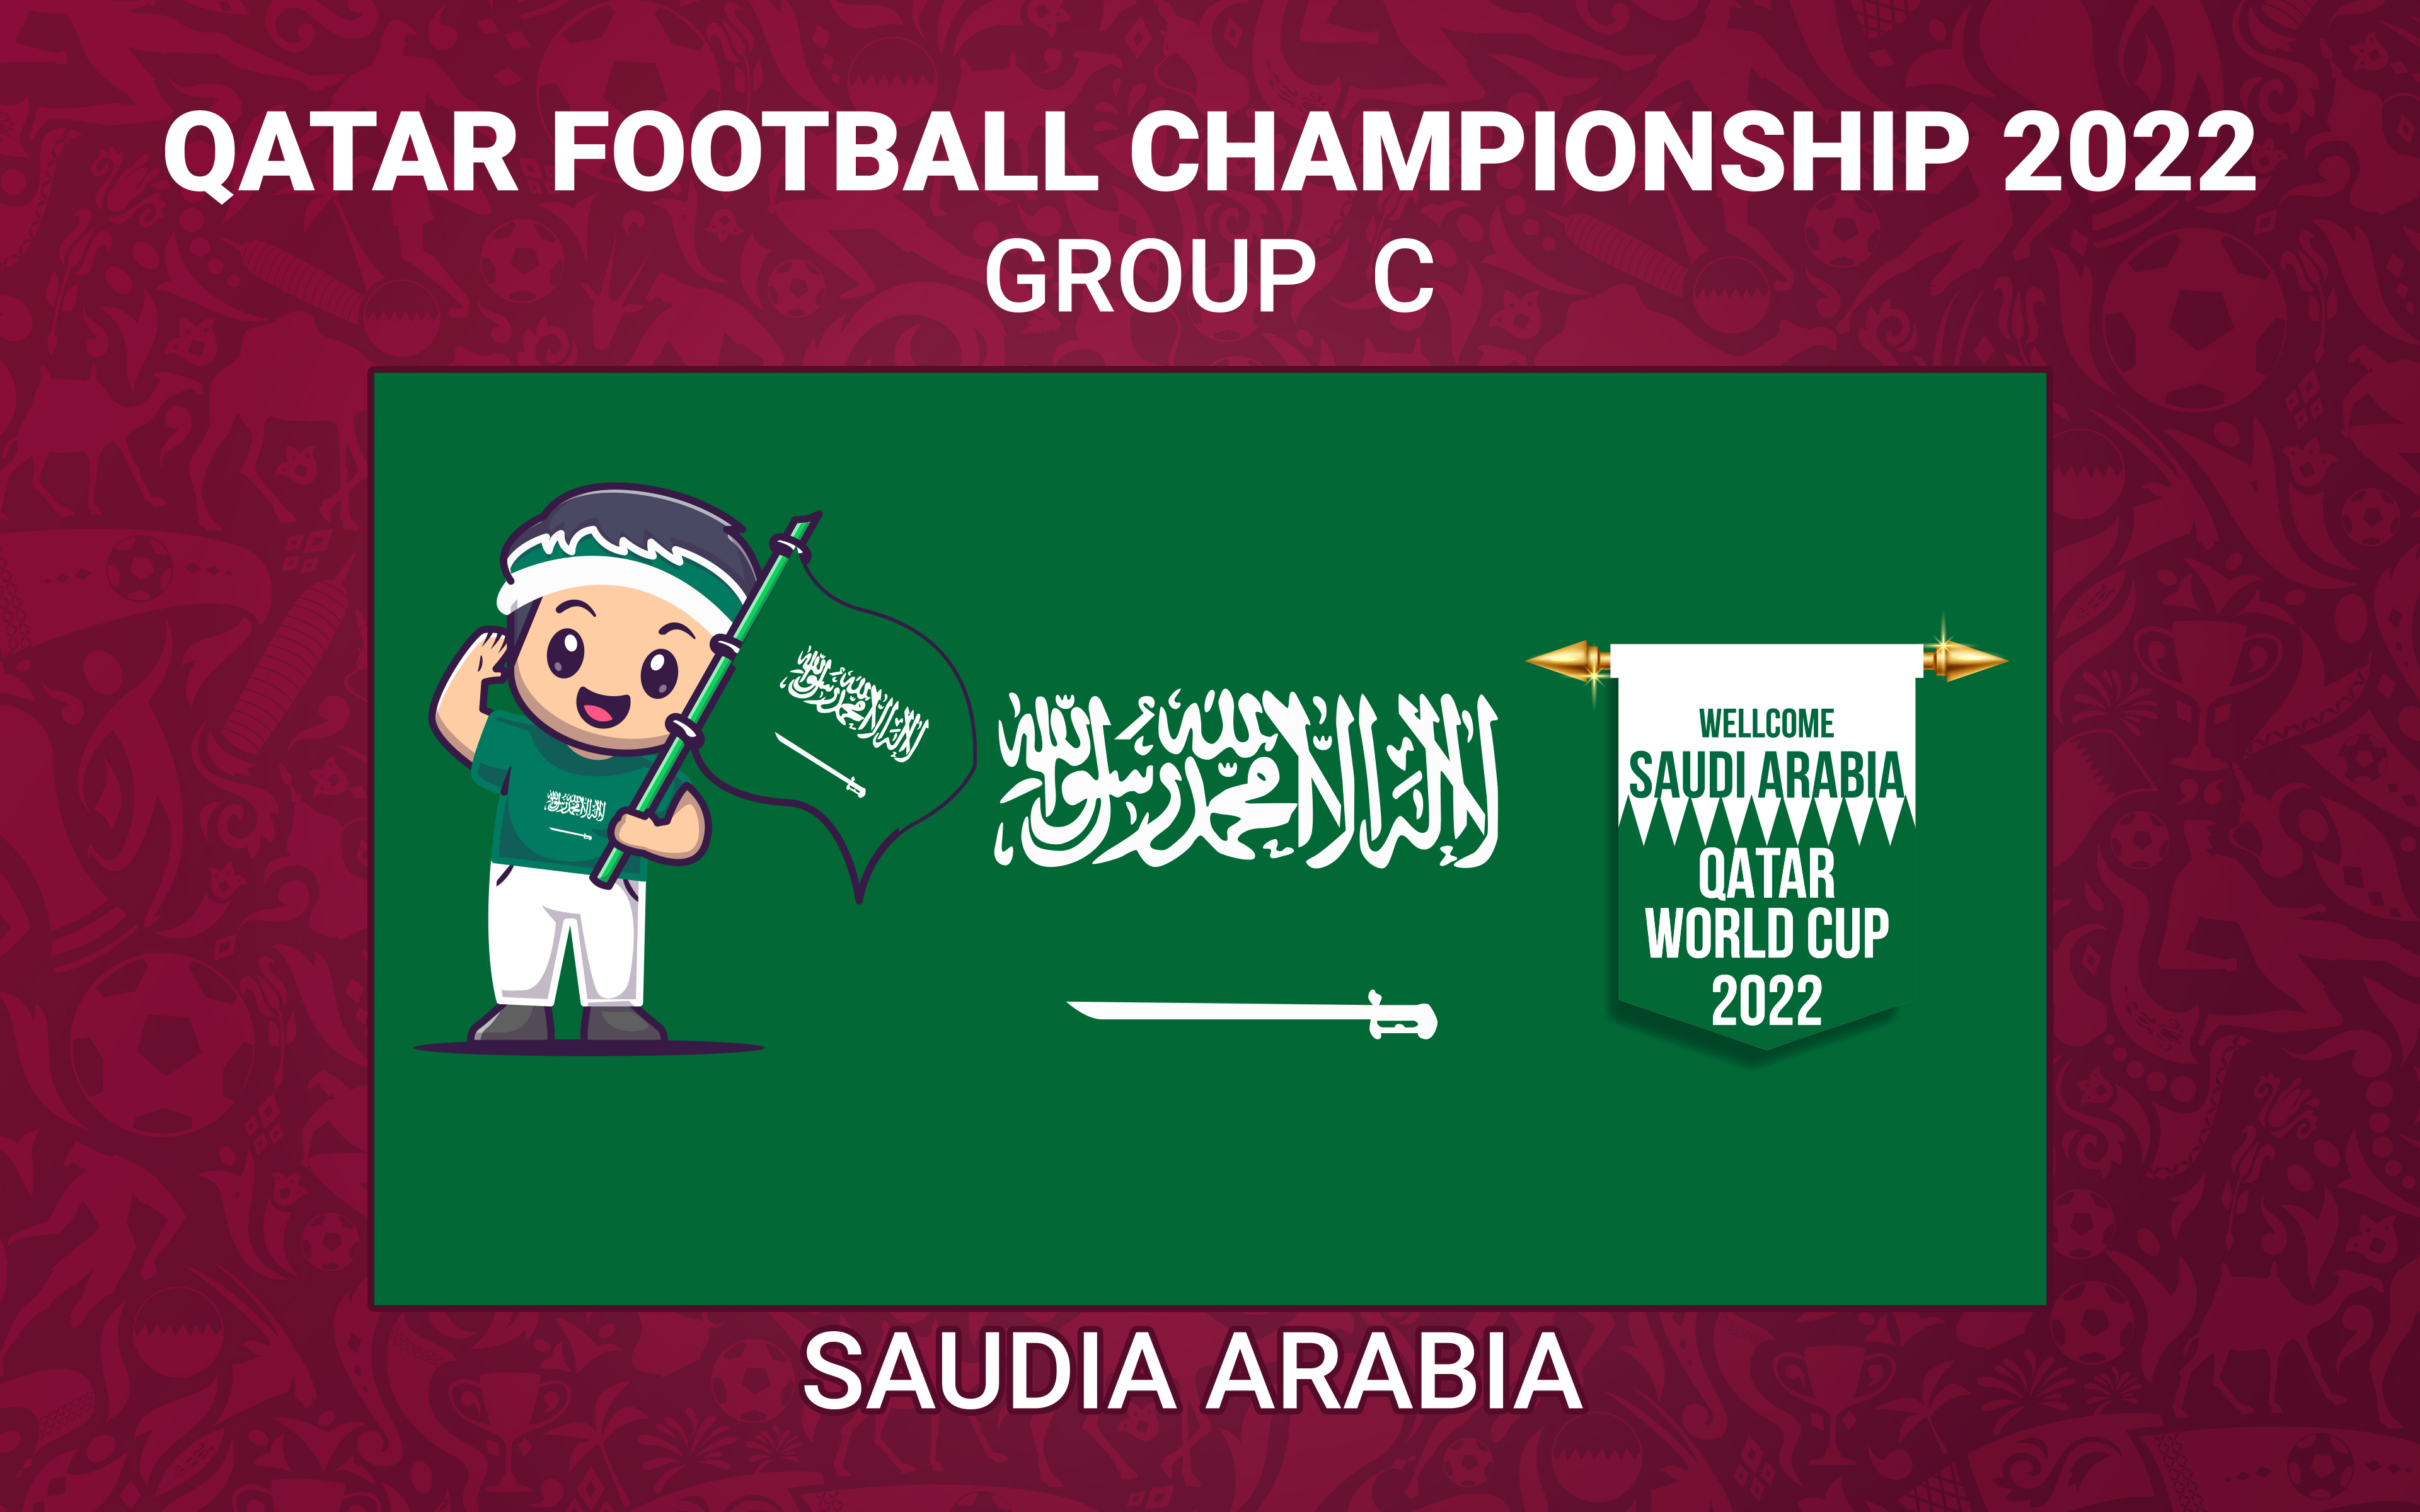 FIFA World Cup Qatar 2022 031 Mistrzostwa Swiata w Pilce Noznej Katar 2022, Grupa C, Arabia Saudyjska